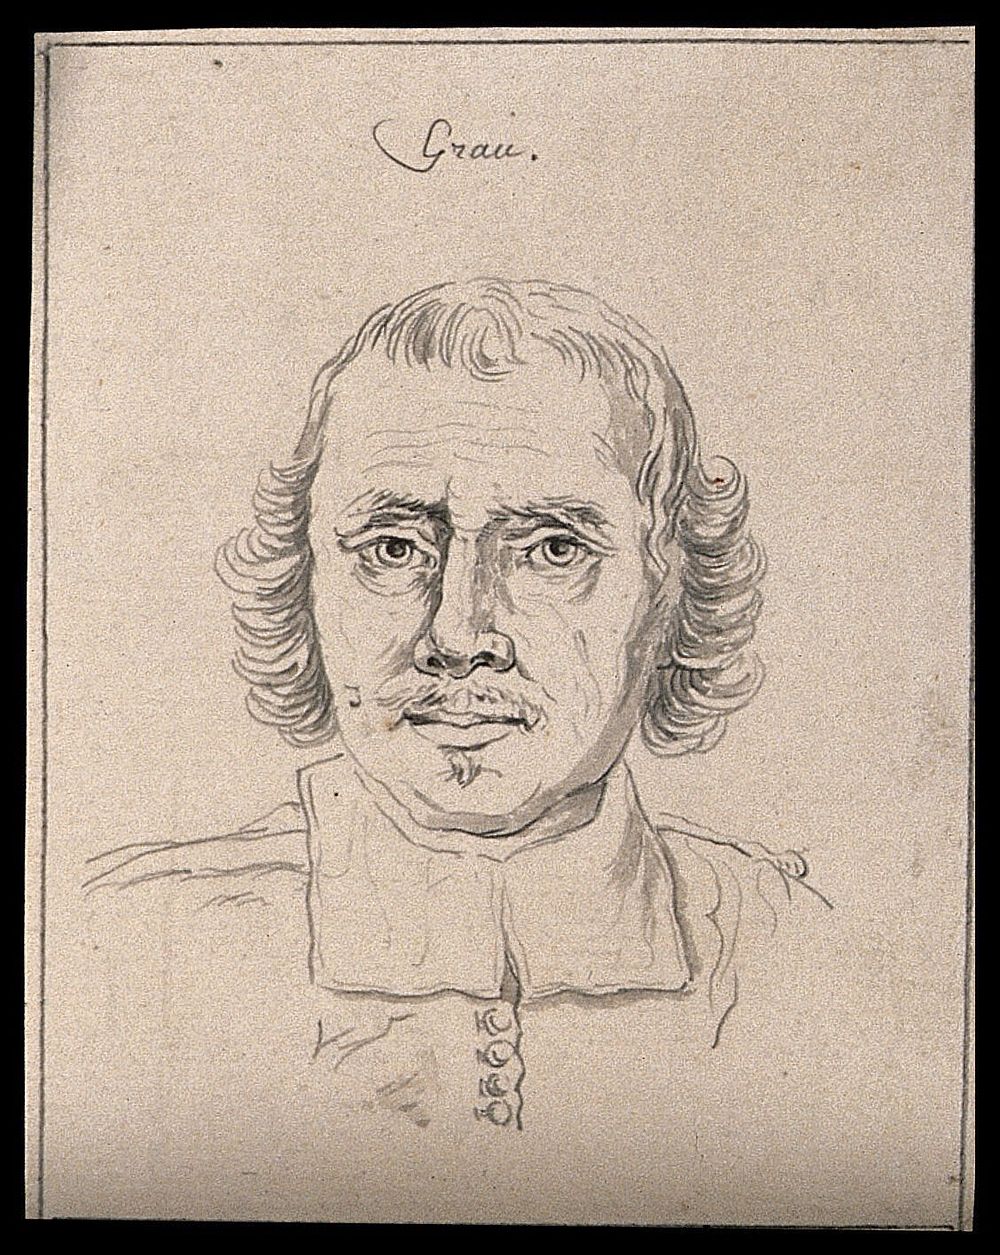 Grau: portrait. Drawing, c. 1794.